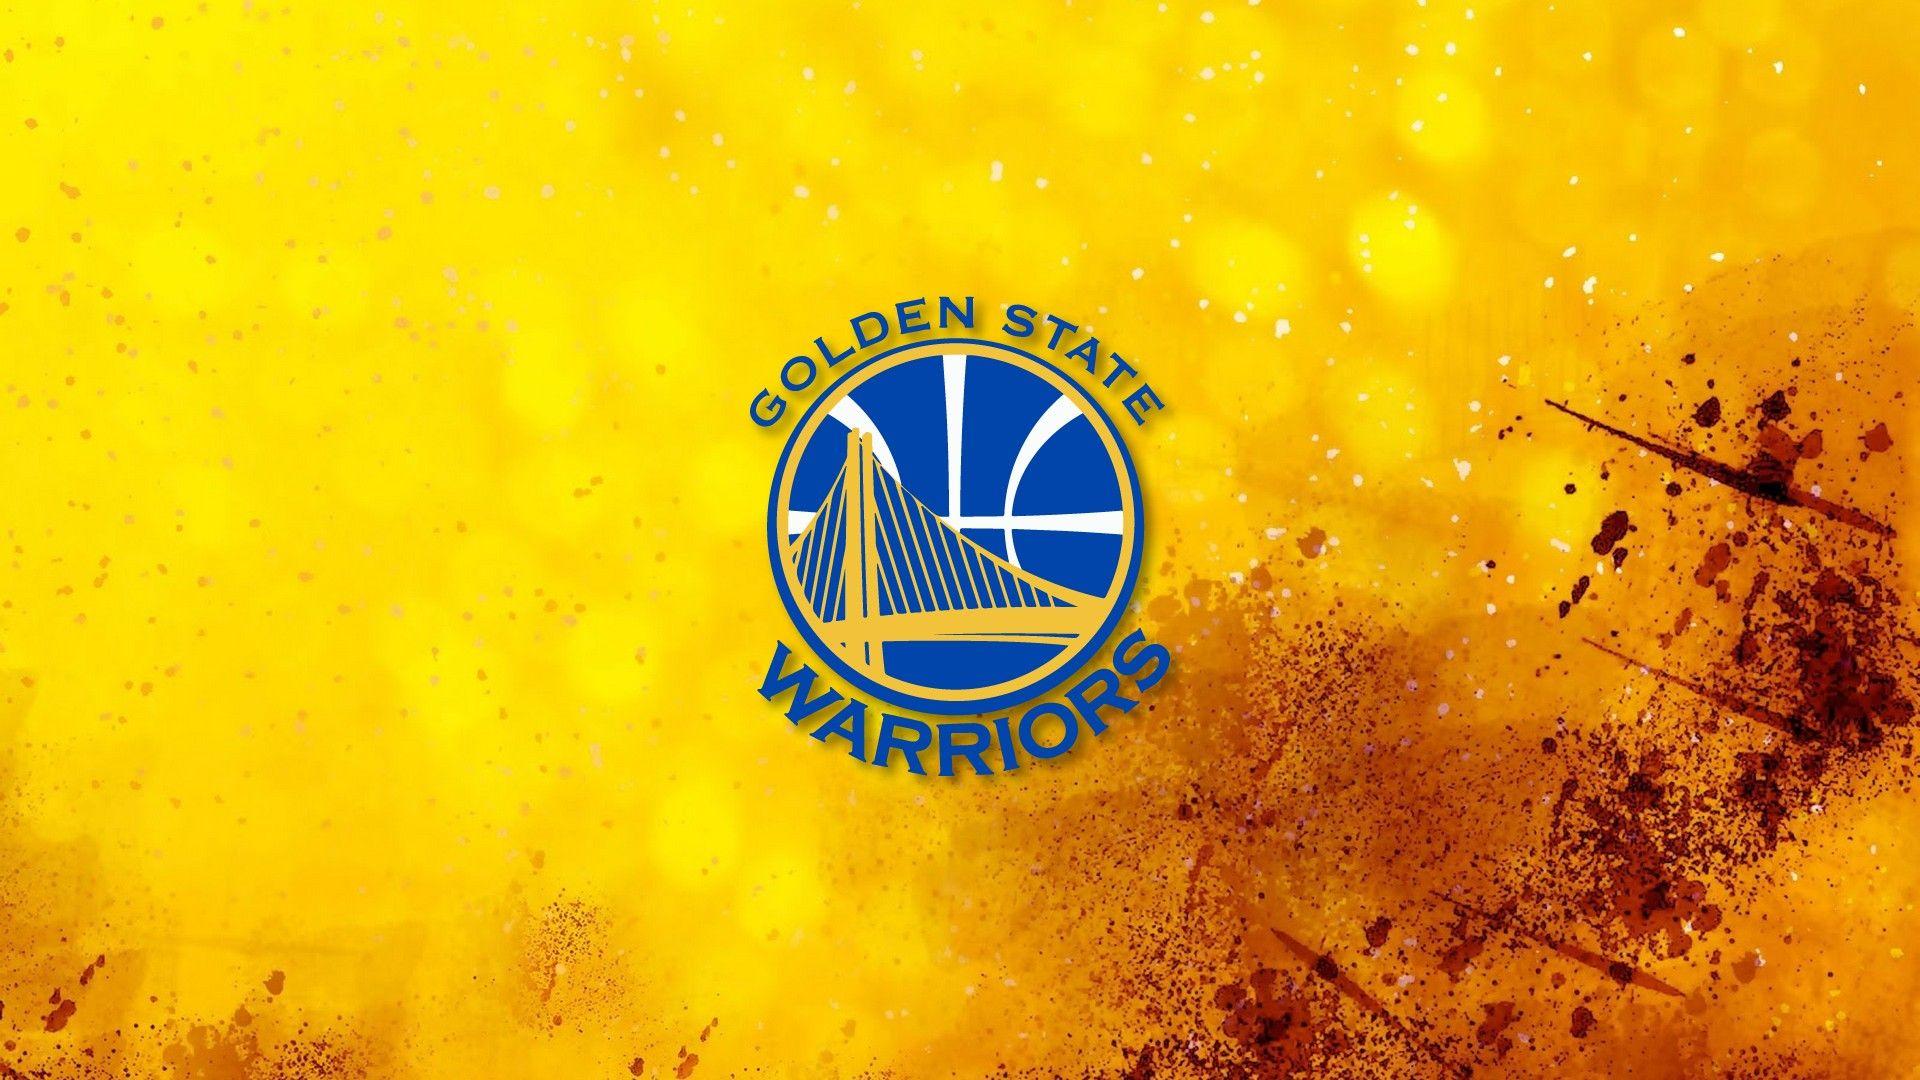 Golden State Warriors Team Wallpapers Top Free Golden State Warriors